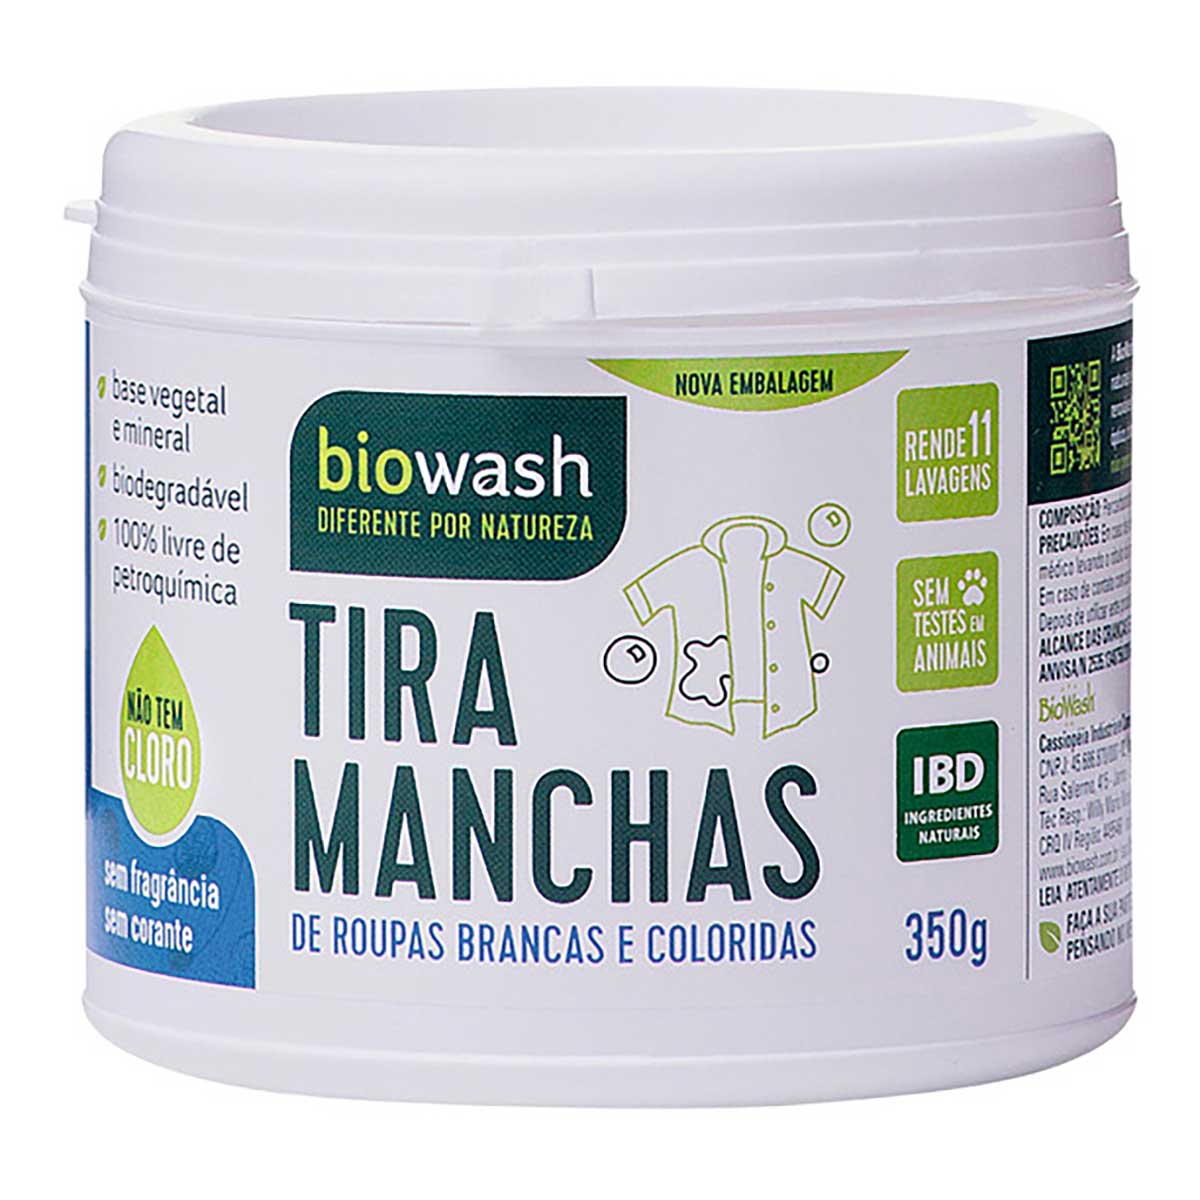 tira-manchas-po-biowash-350g-1.jpg